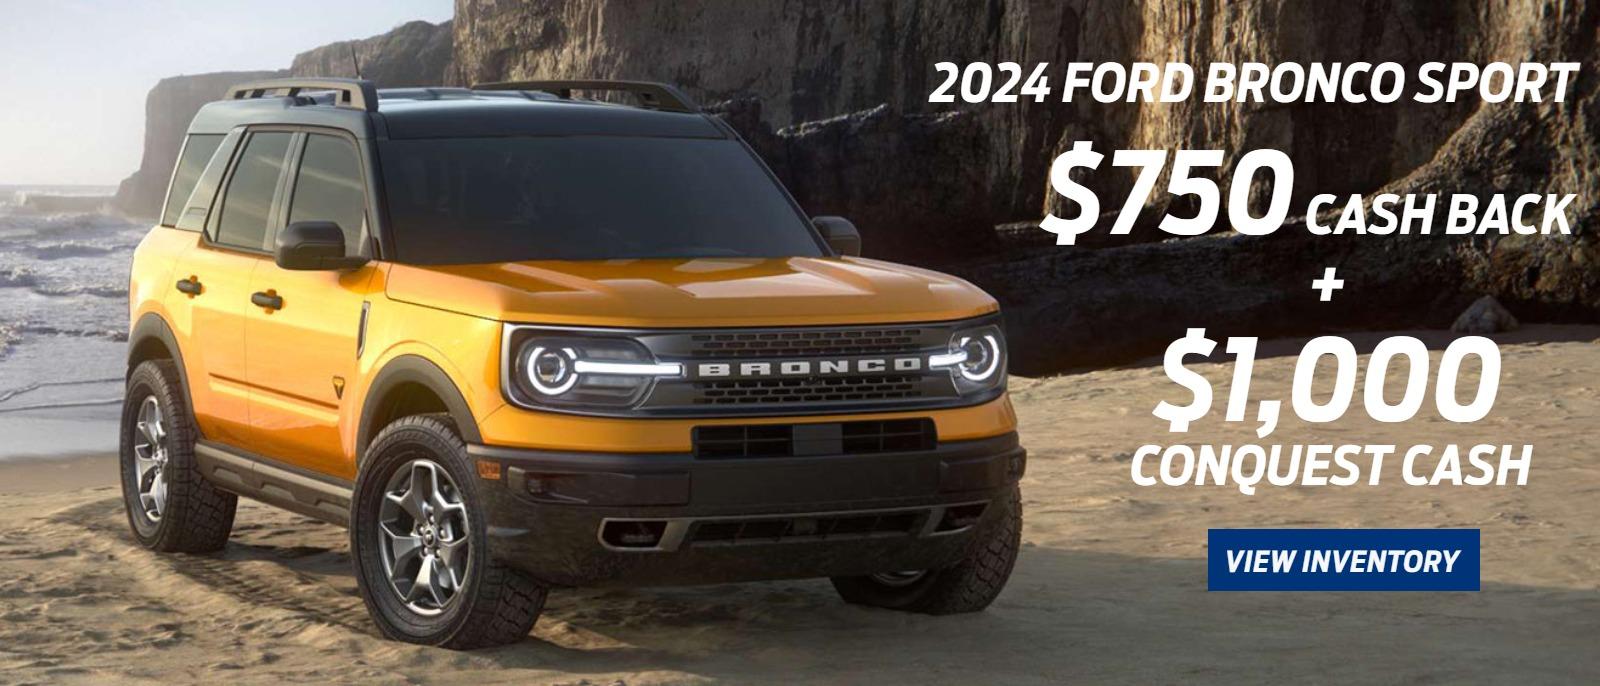 2024 Ford Bronco Sport: $750 Bonus Customer Cash + $1,000 Jeep Competitive Conquest